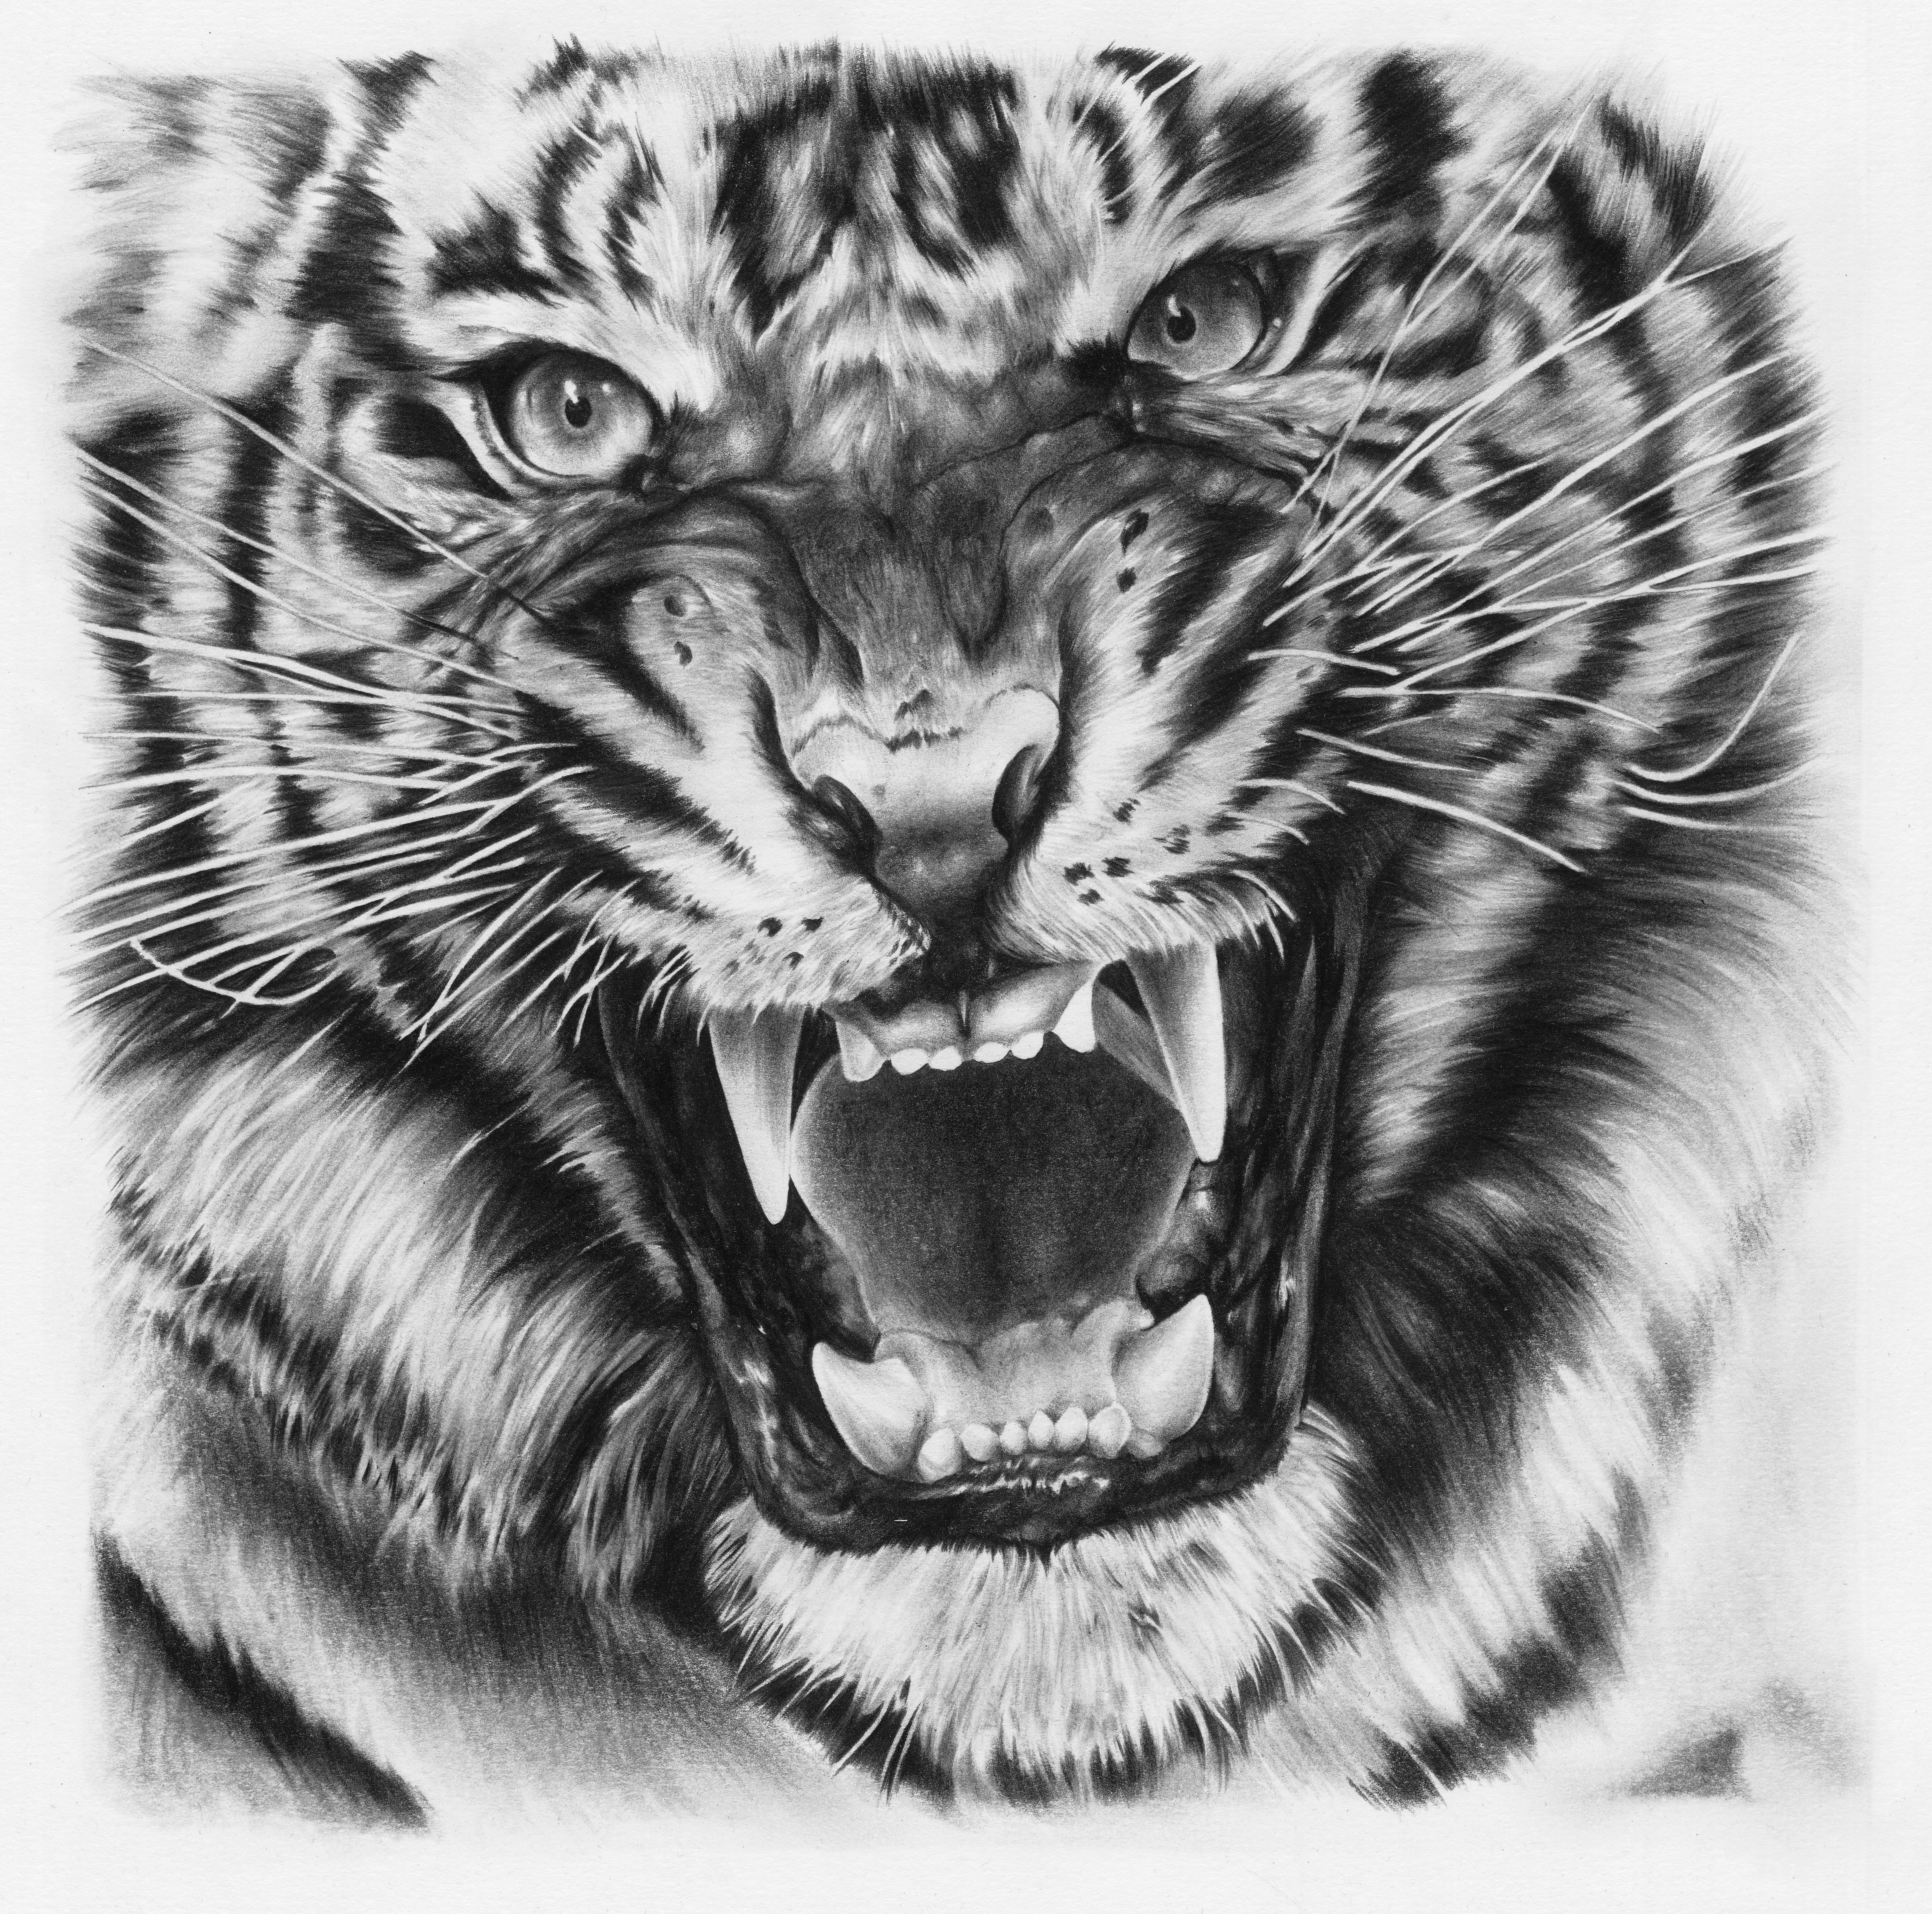 Tiger drawing by JoshuaBeatson on DeviantArt